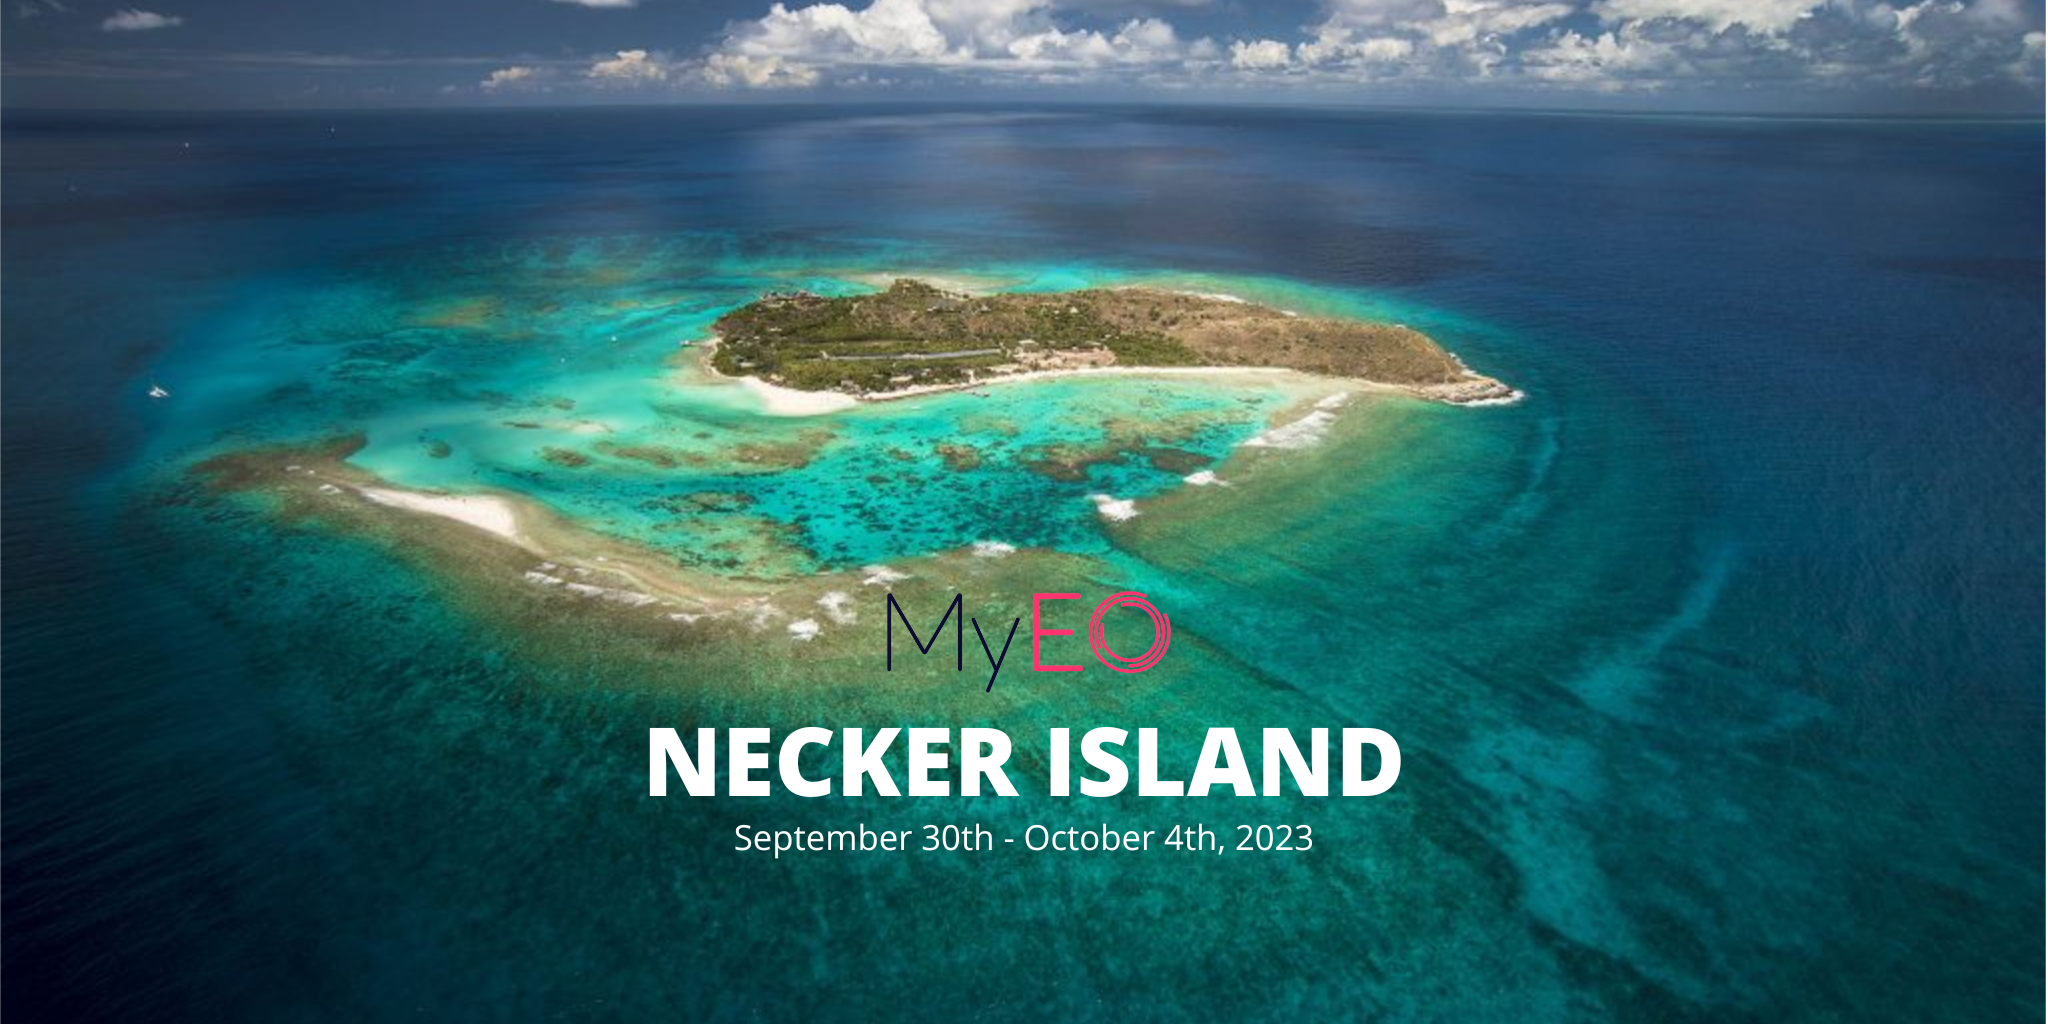 My EO Necker Island